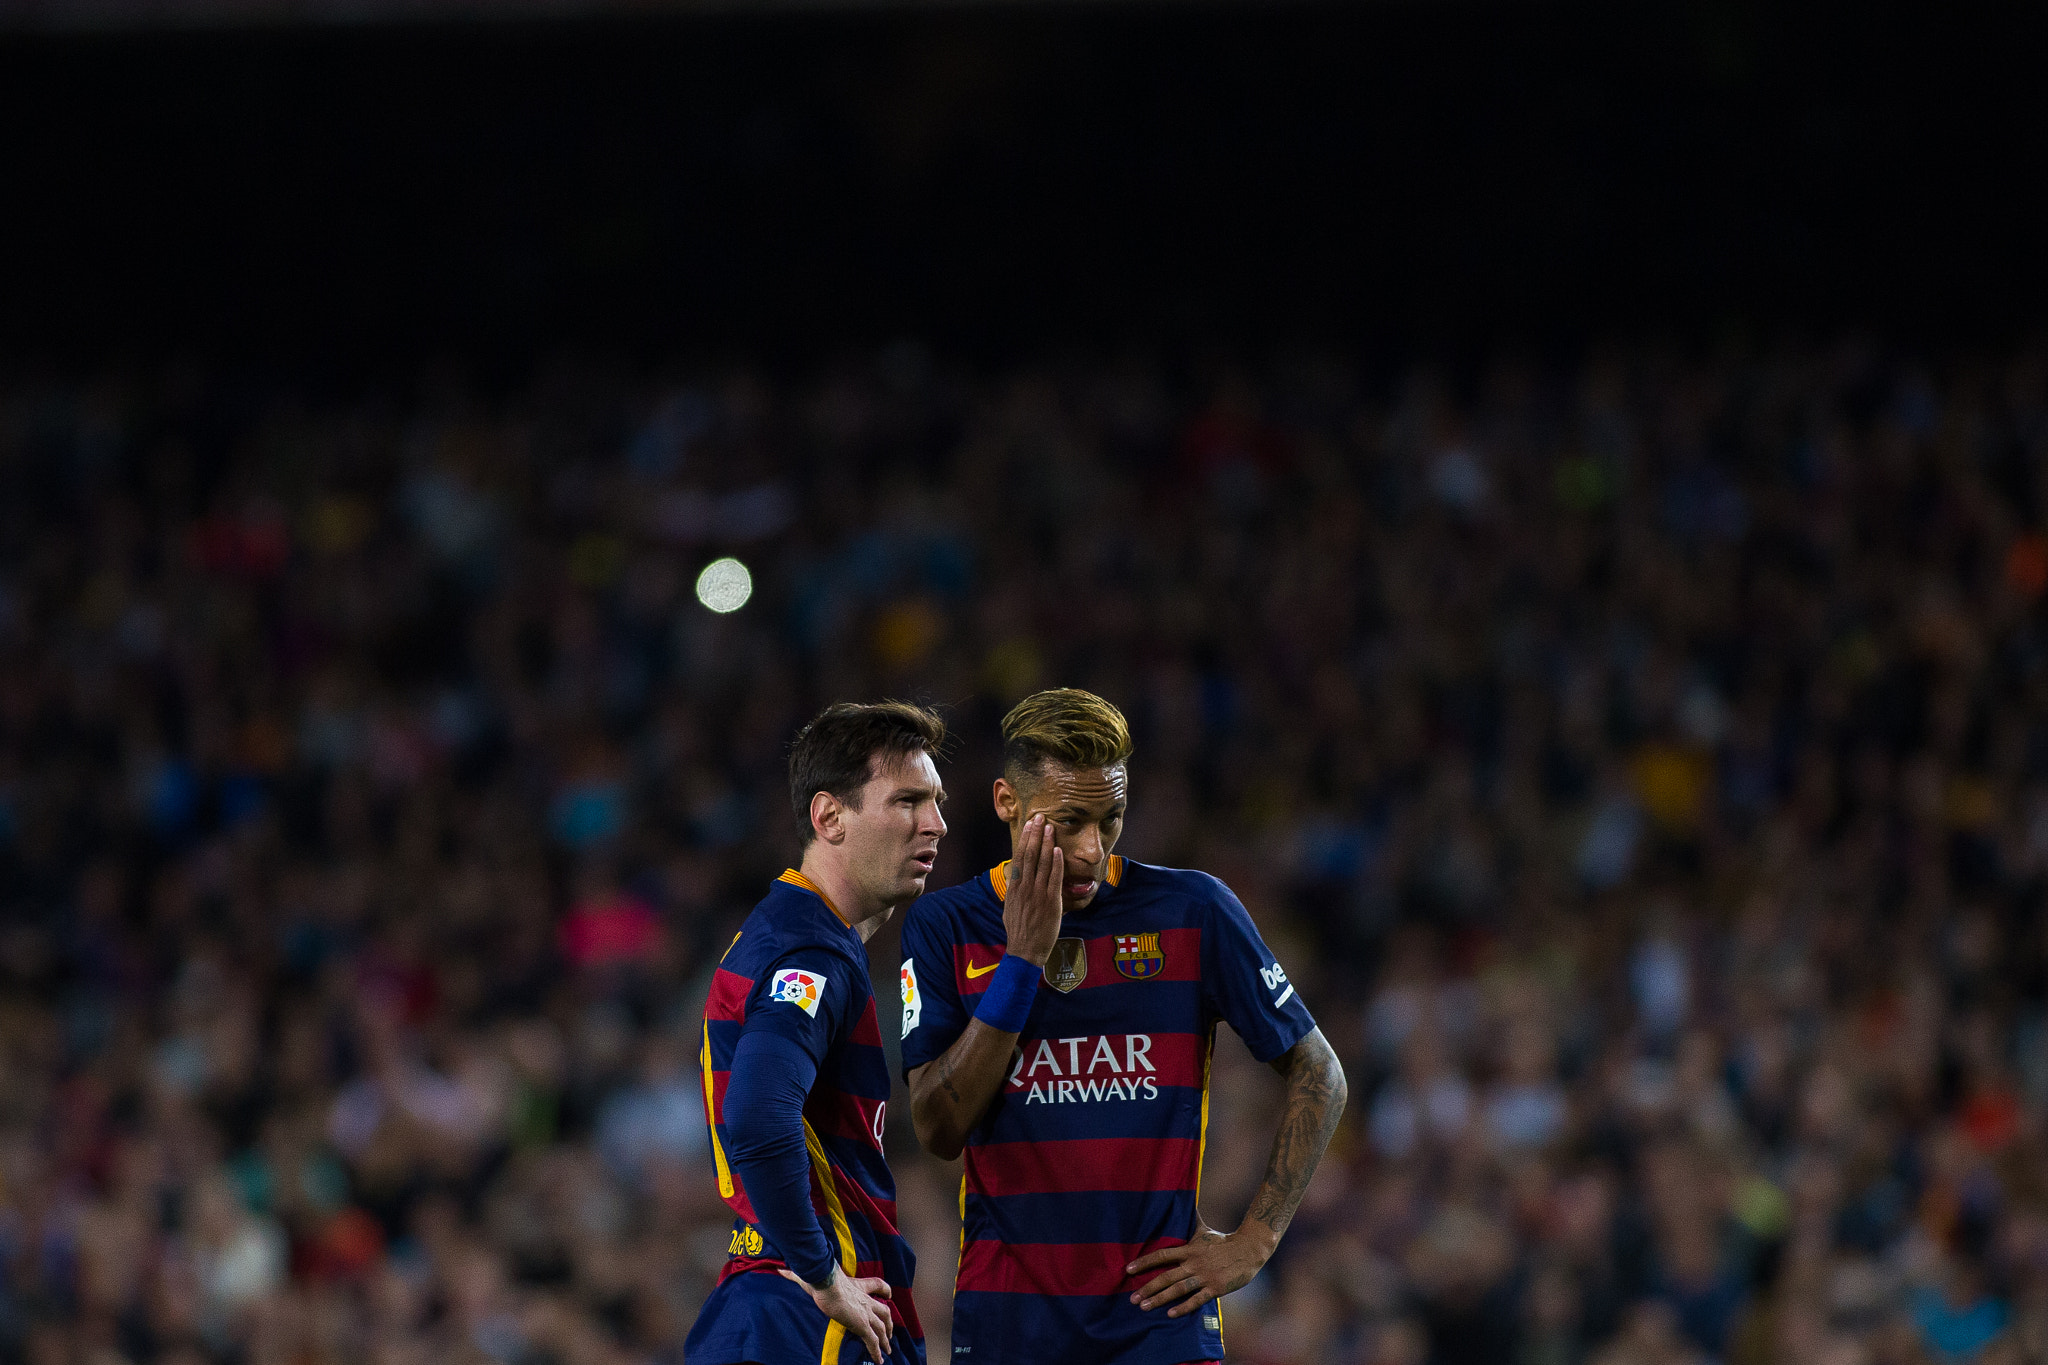 Leo Messi and Neymar Jr